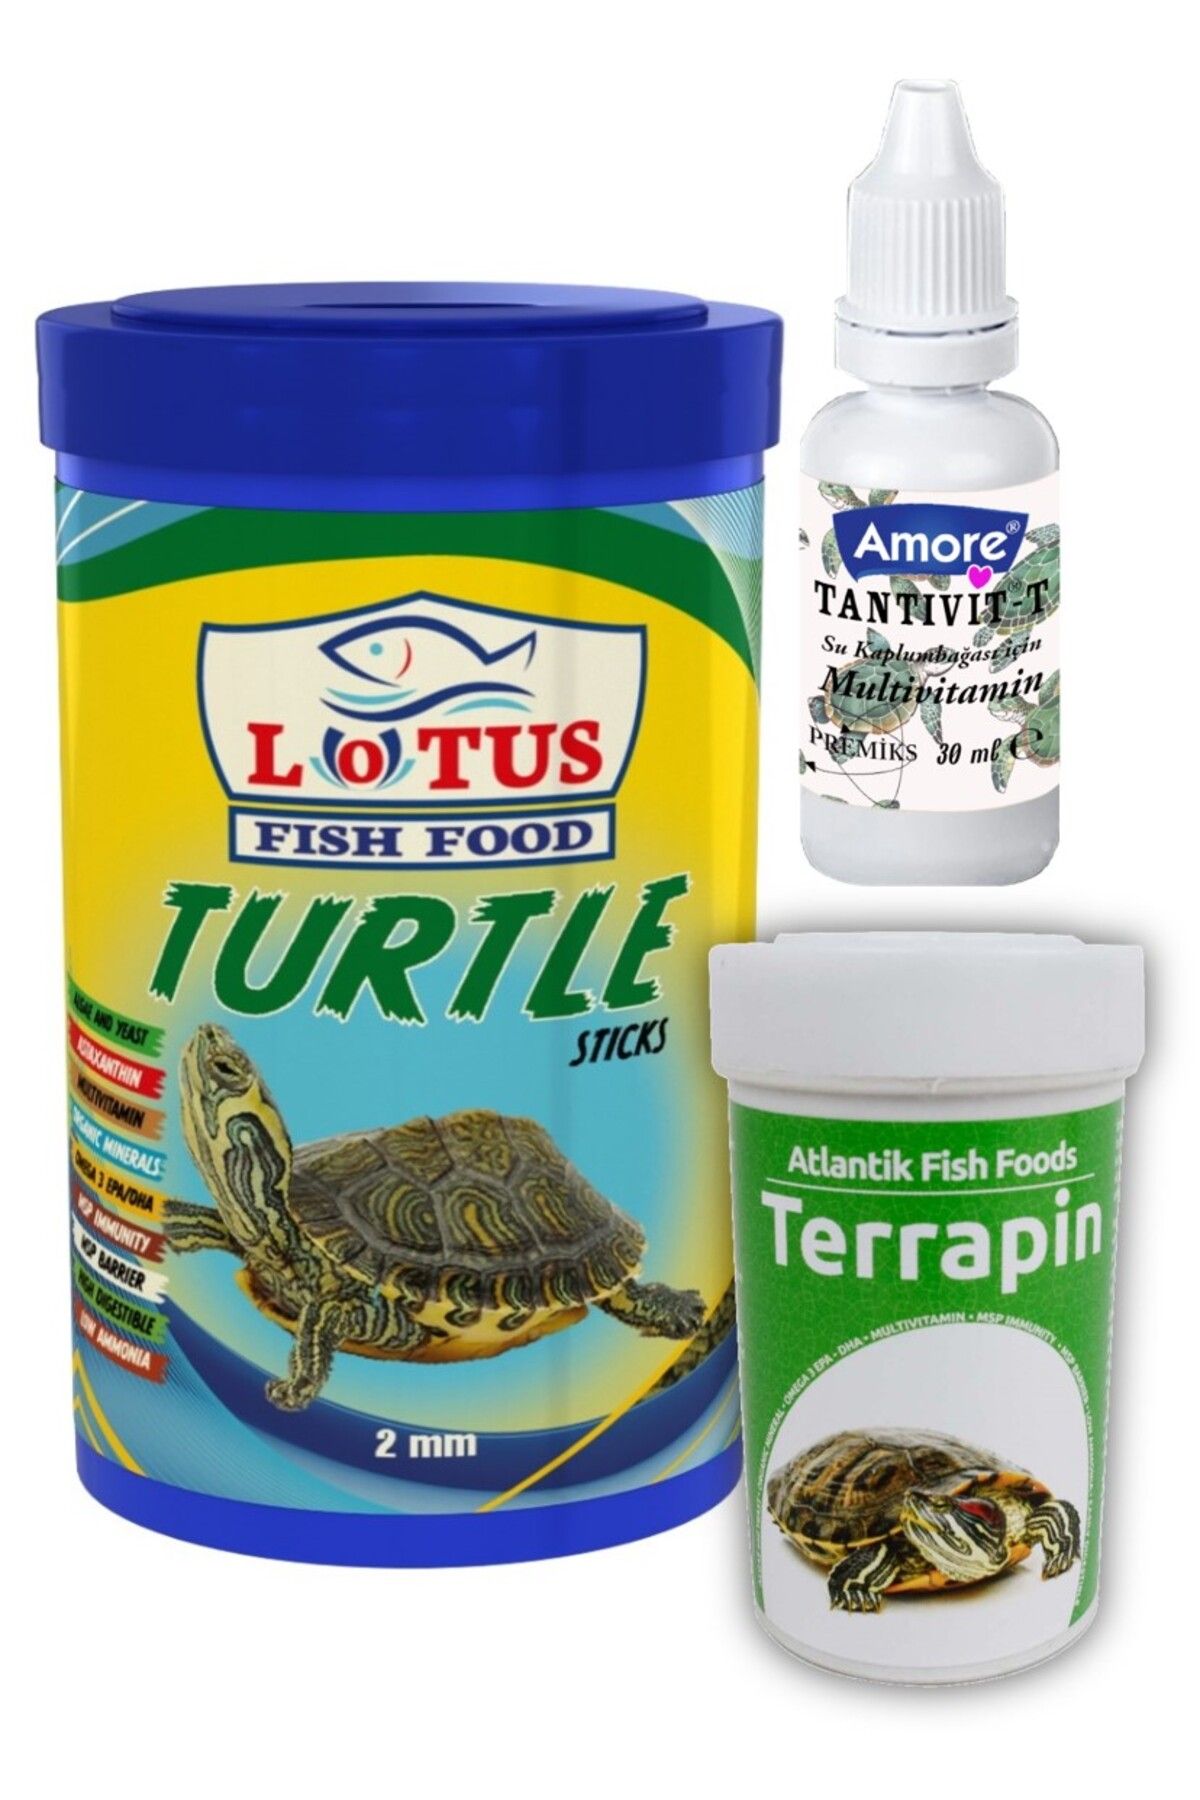 Lotus Kaplumbağa Yemi 1000ml, terrapin 100 ml Turtle Sticks, Multivitamin Seti